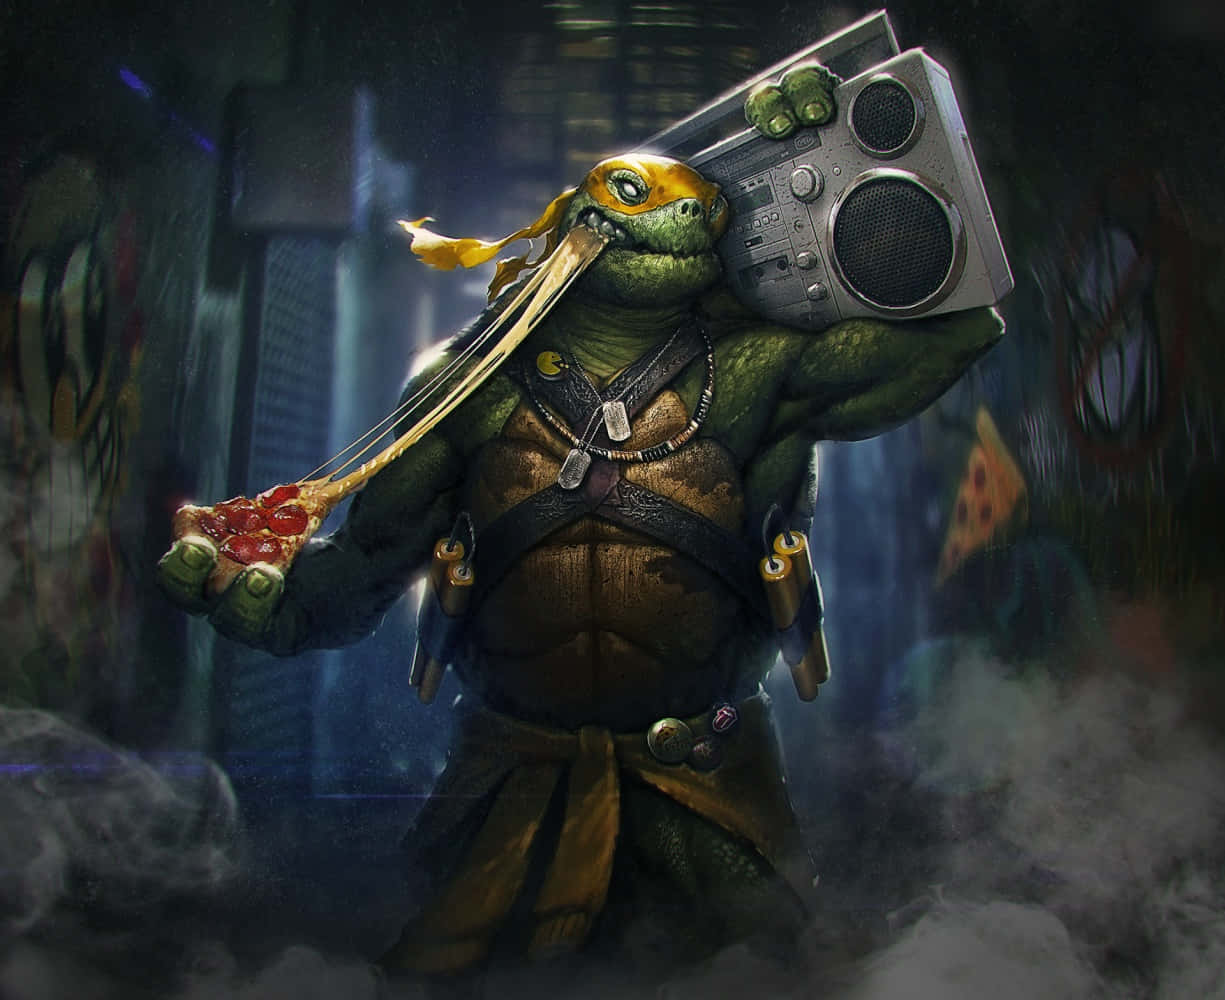 The Teenage Mutant Ninja Turtles - ready to take on the evil Shredder.